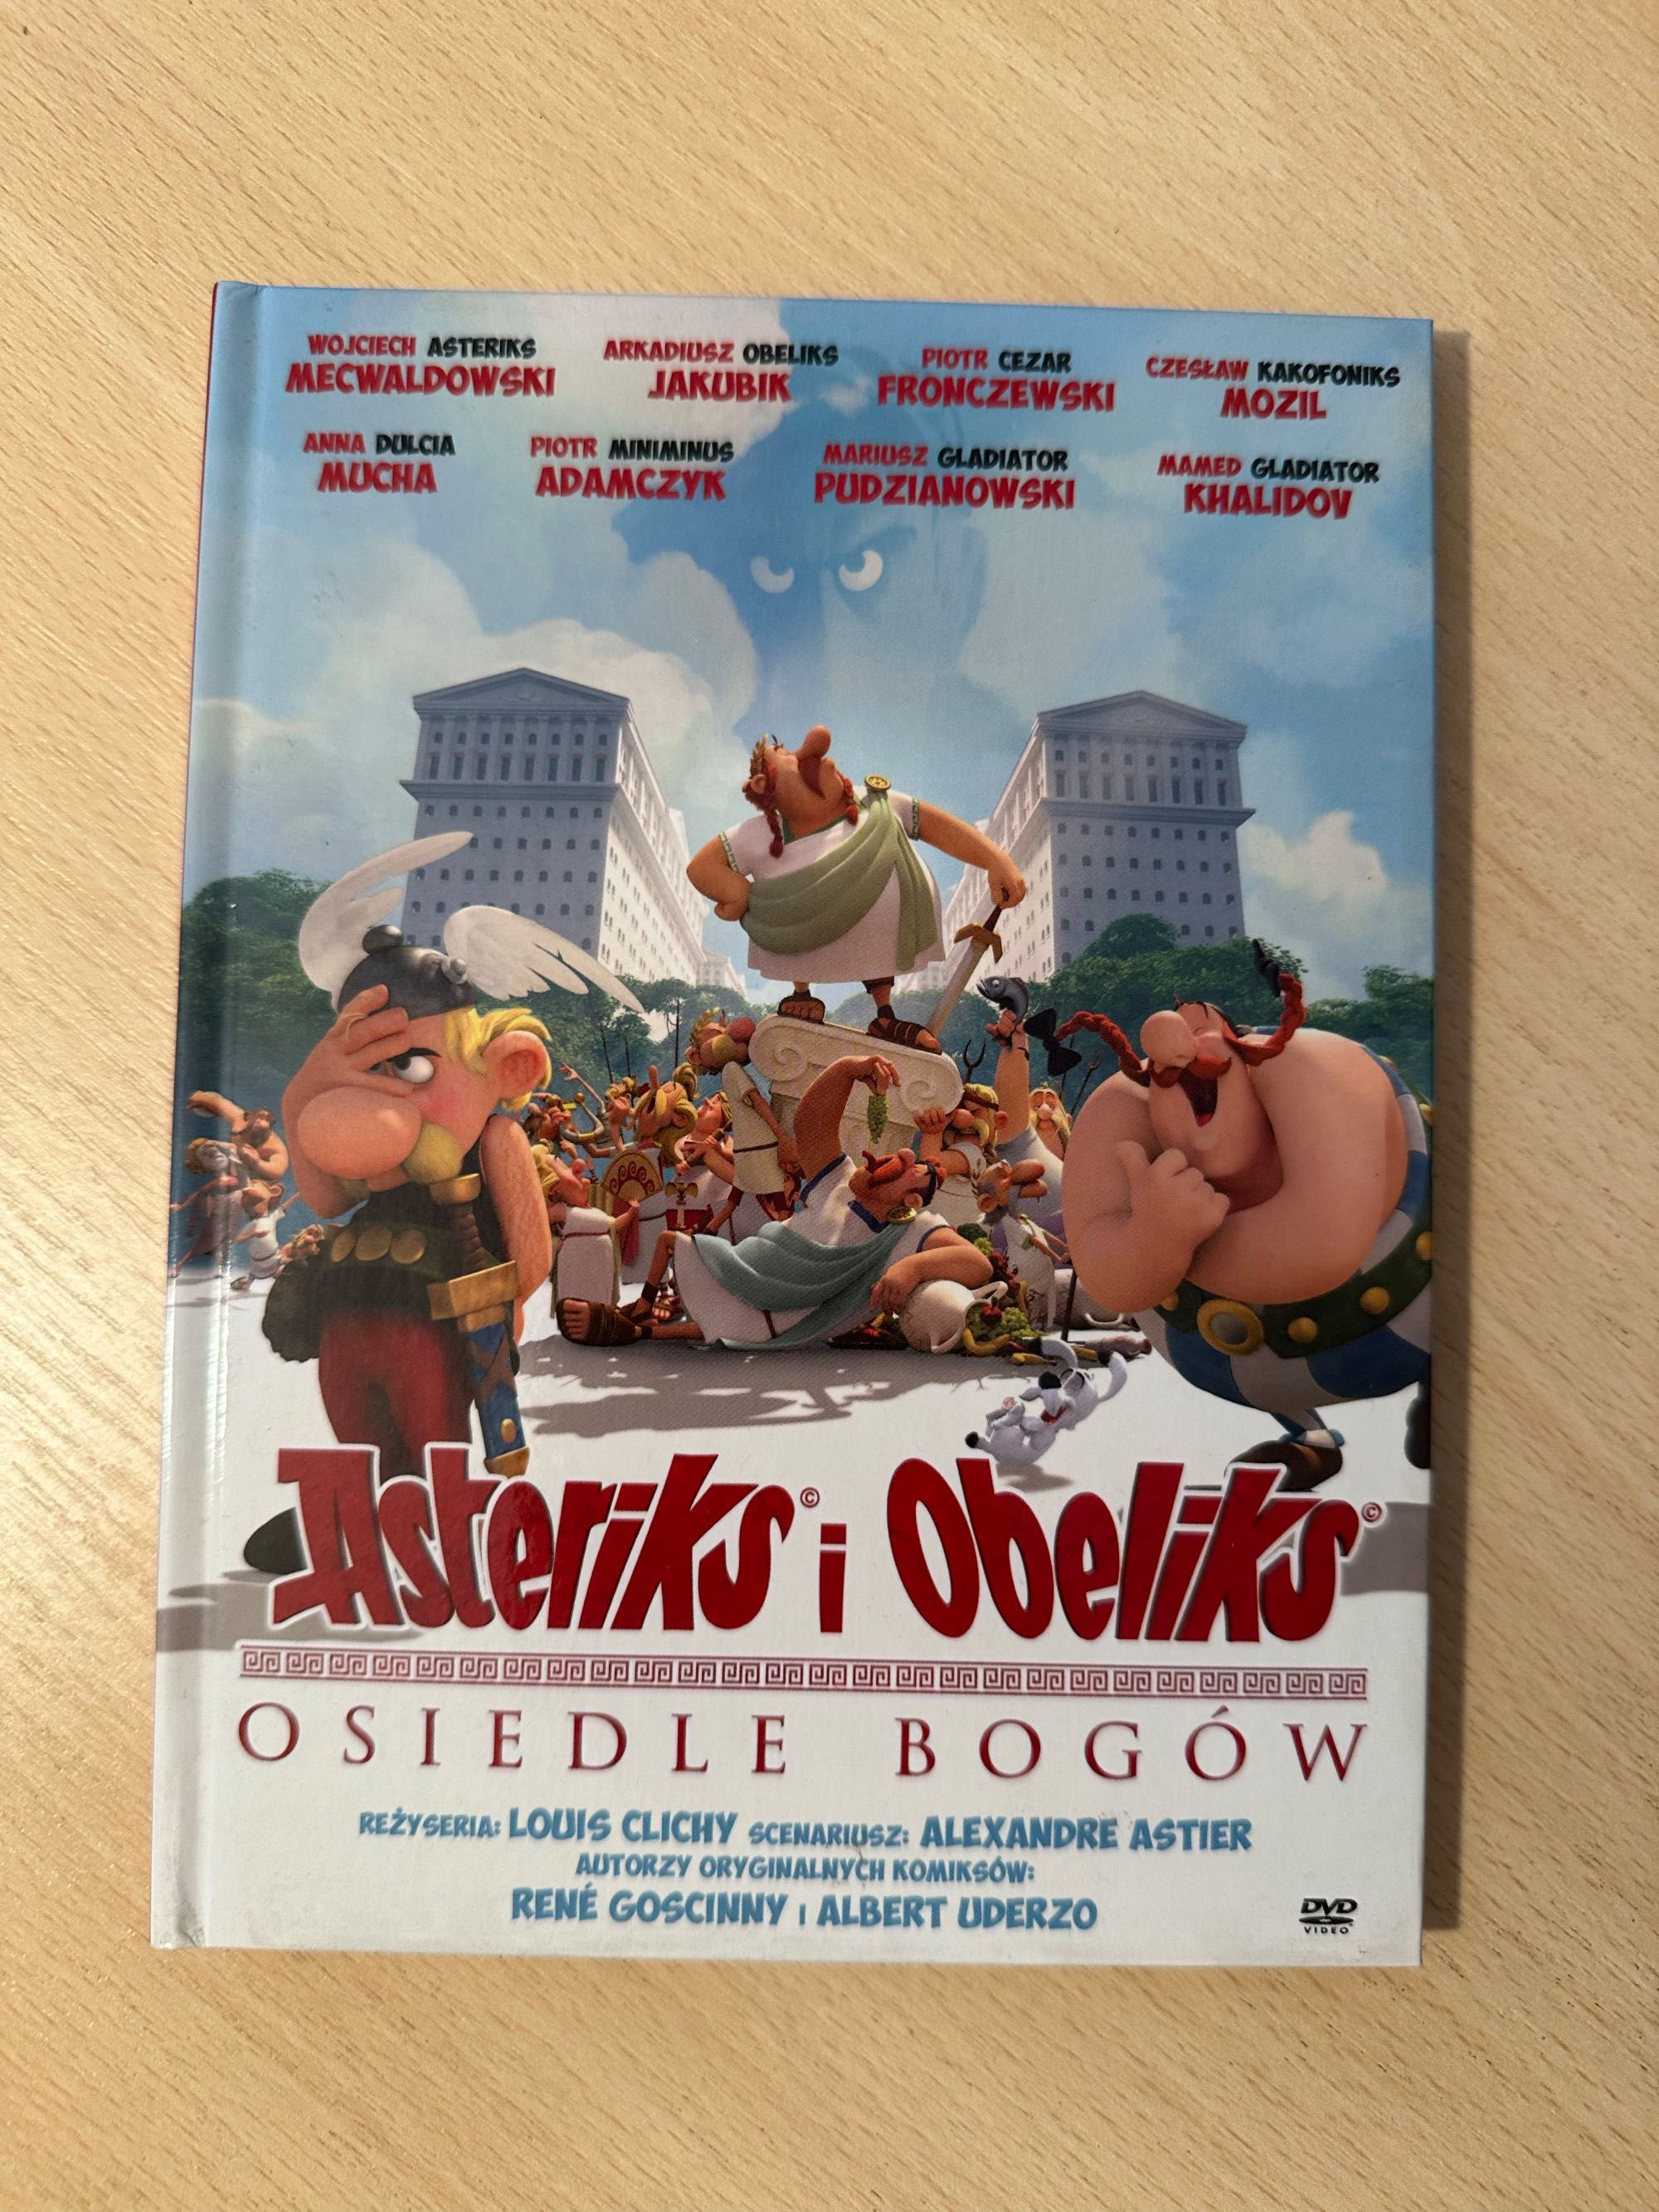 film "Asterix i Obelix. Osiedle Bogów"